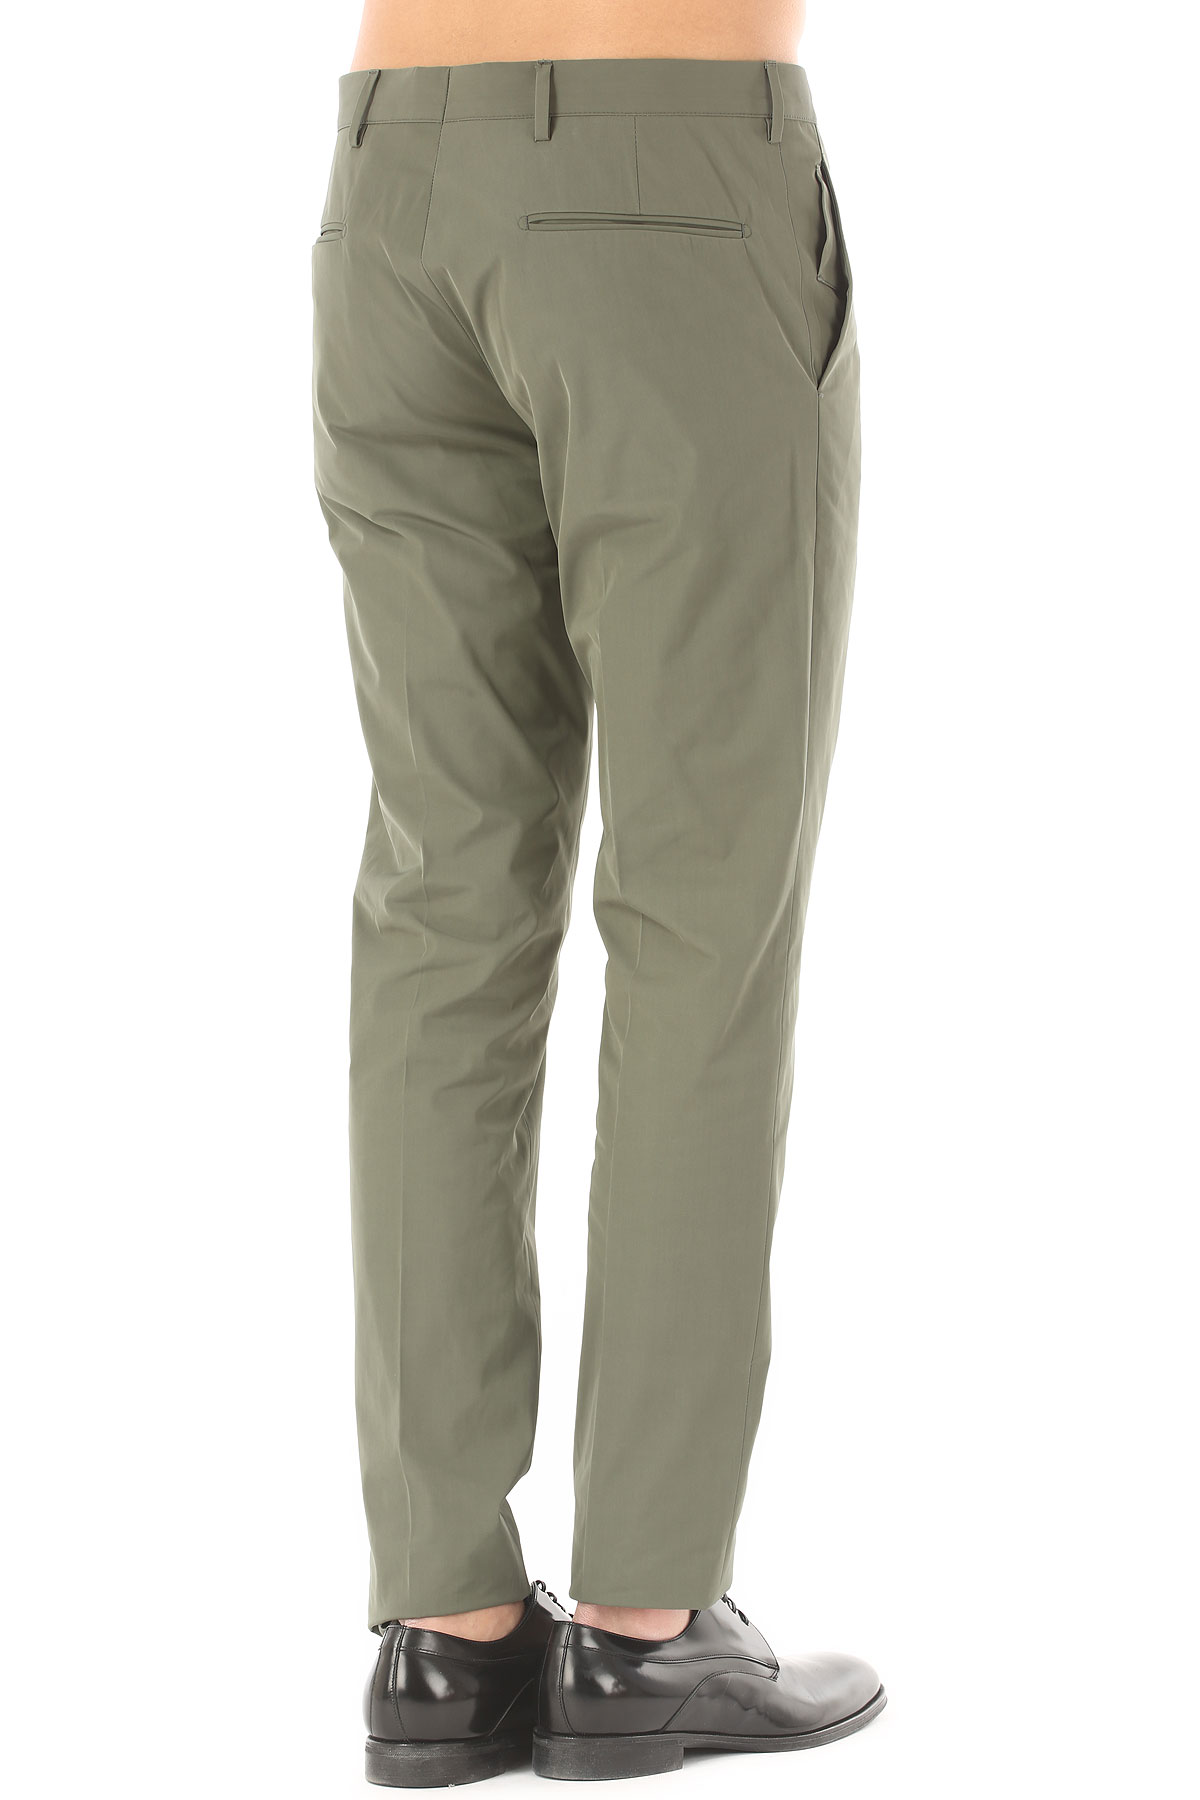 Prada Pantalon Homme Outlet, Vert sauge, Polyester, 2017, 46 50 52